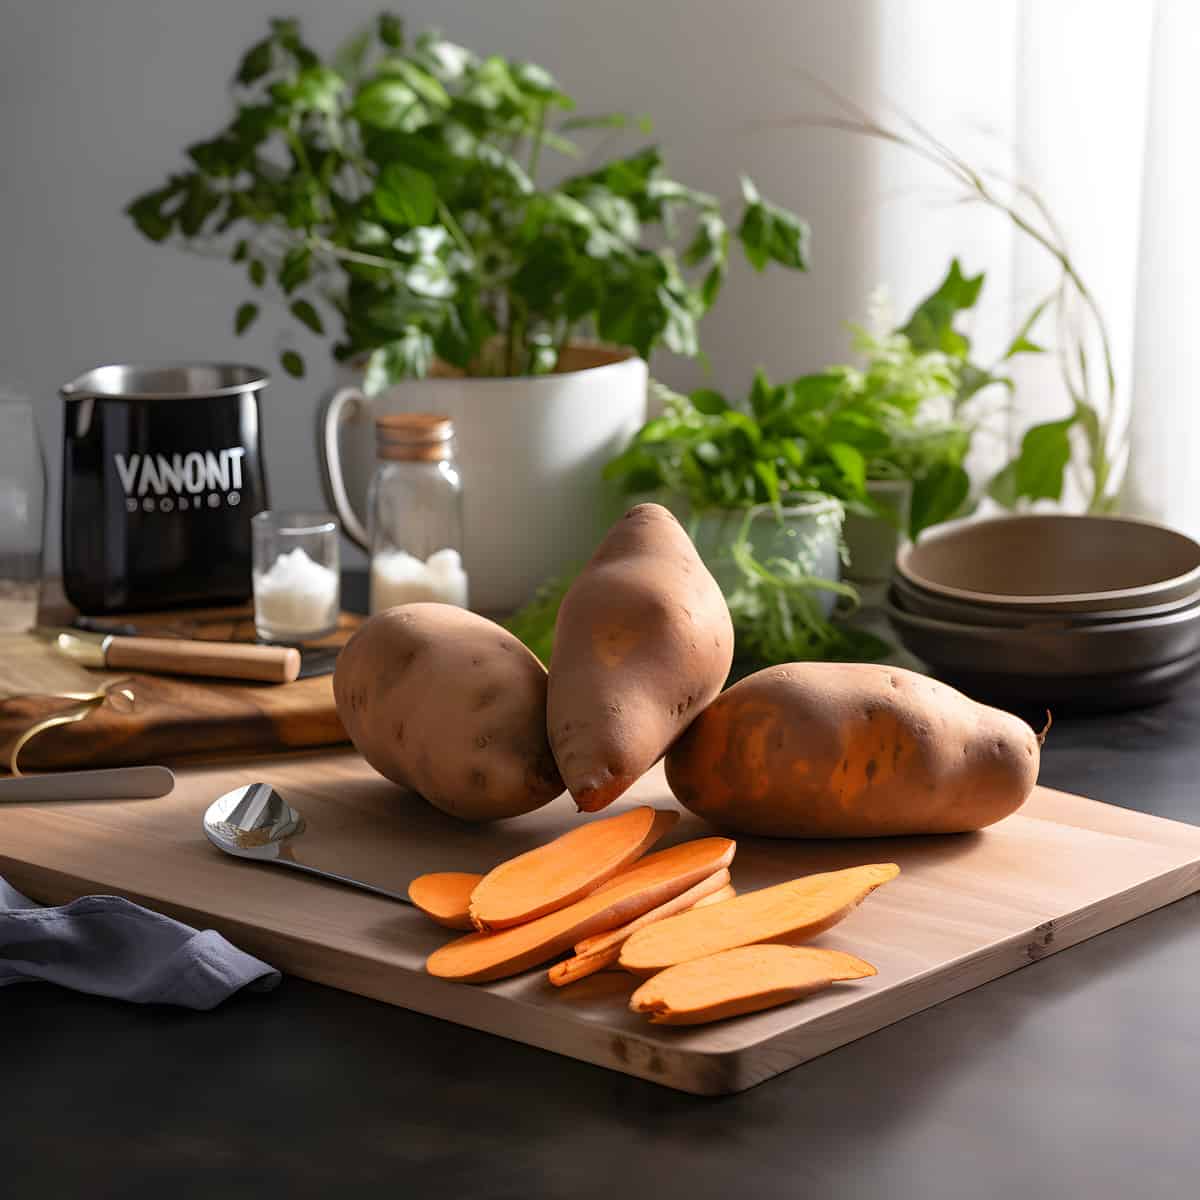 Waina Sweet Potatoes on a kitchen counter